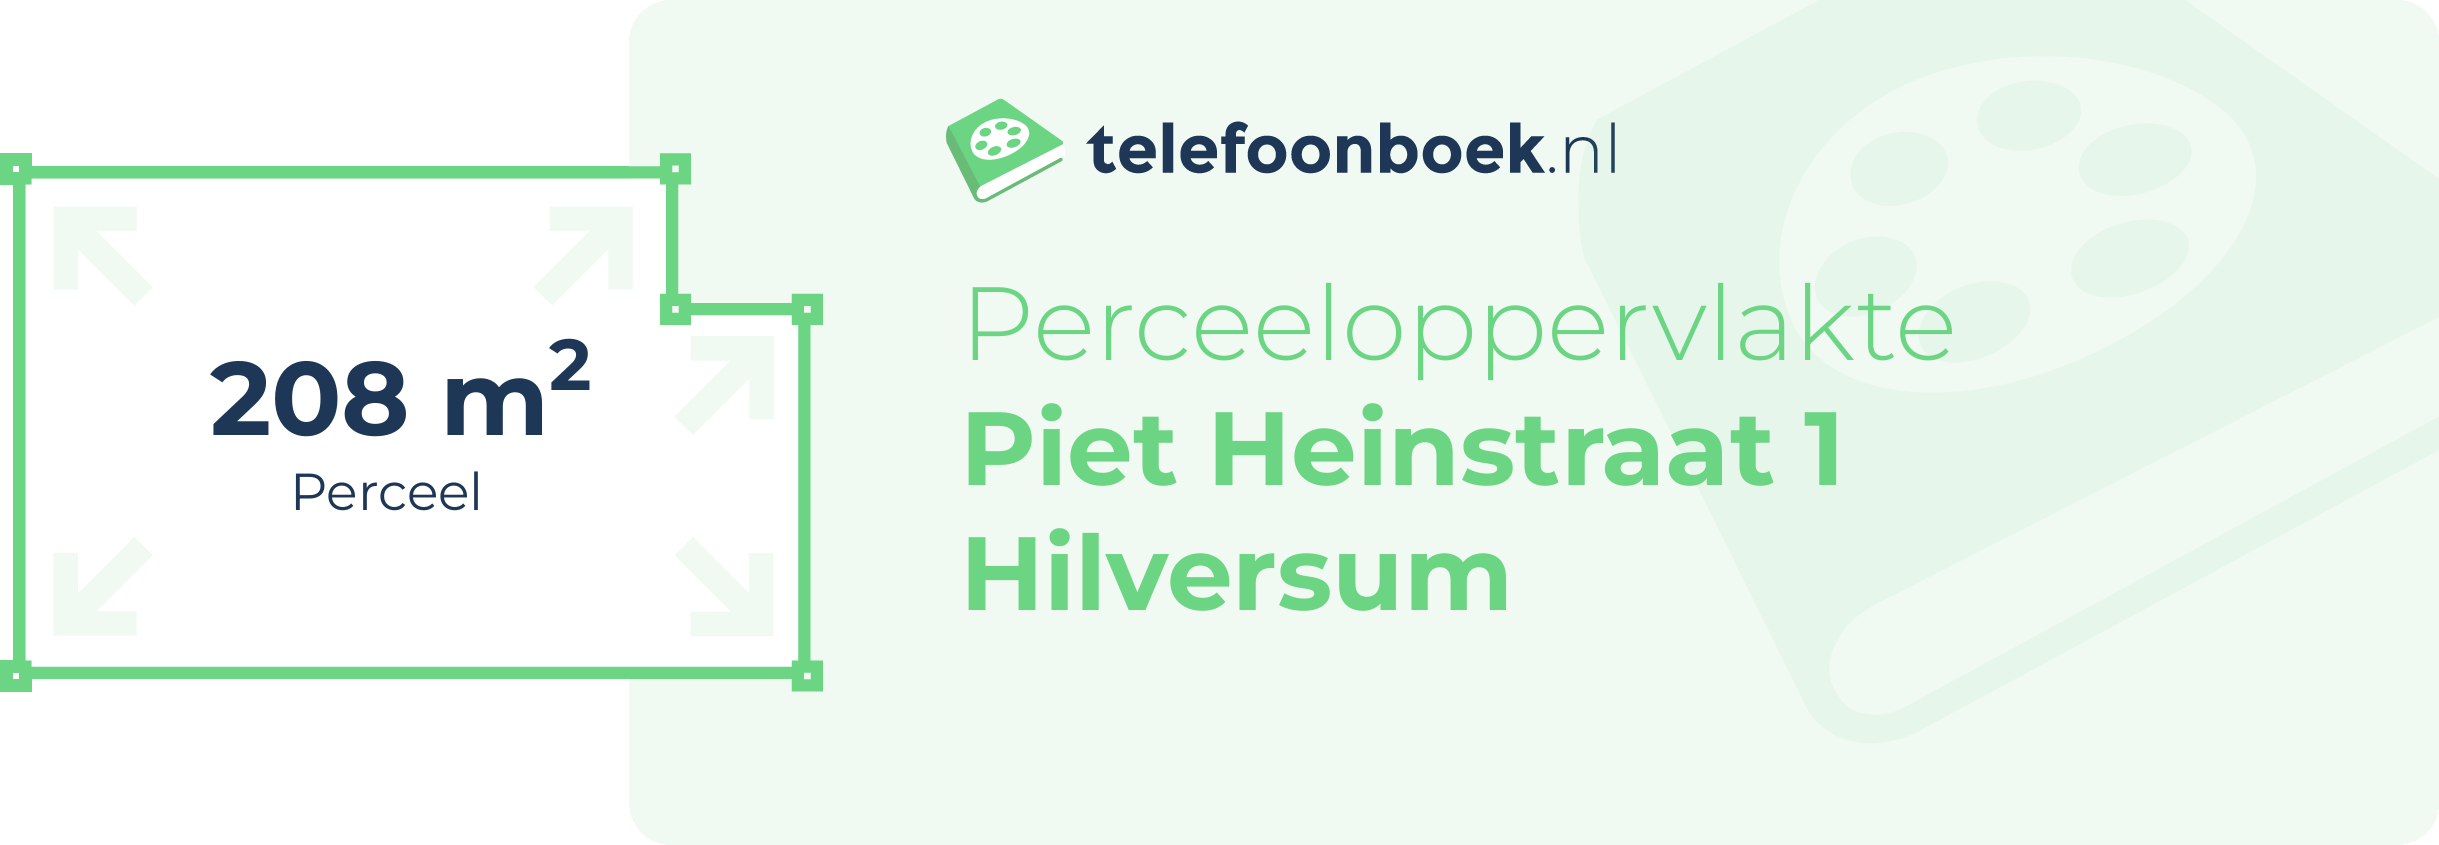 Perceeloppervlakte Piet Heinstraat 1 Hilversum